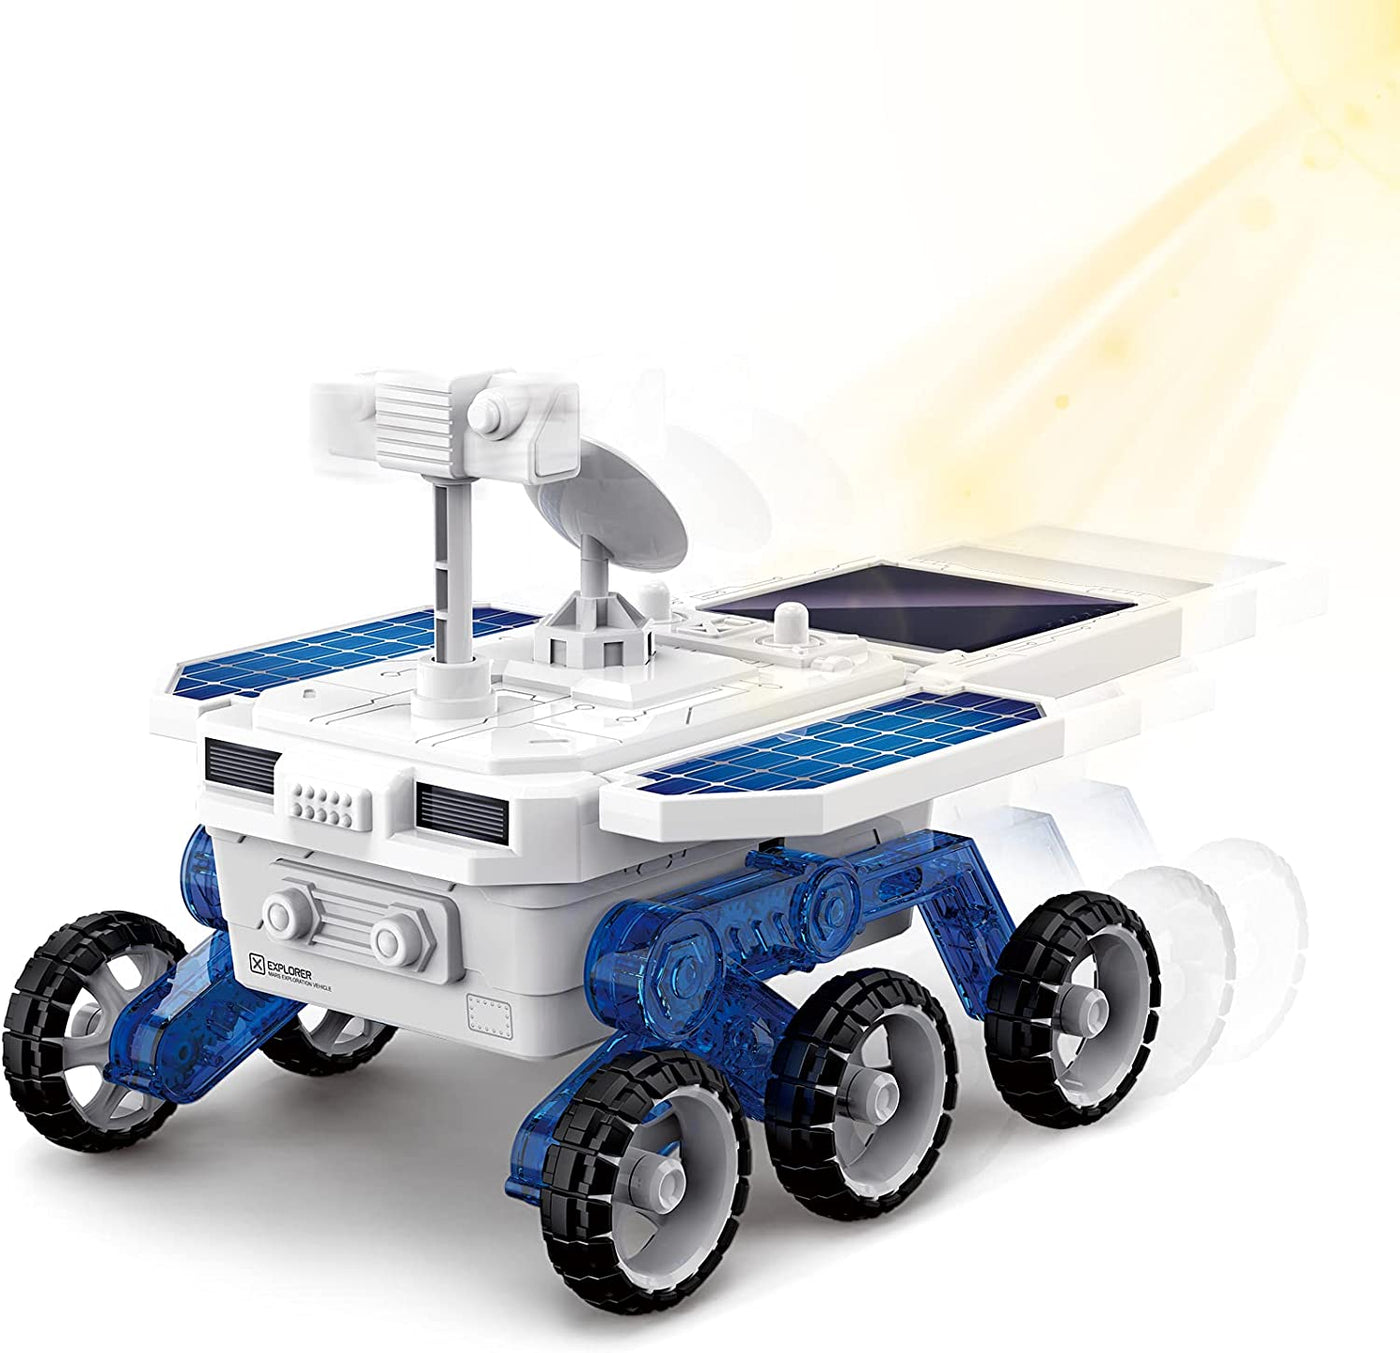 Educational Solar Power Car Science Assembly Vehicle Kit for Kids, DIY STEM